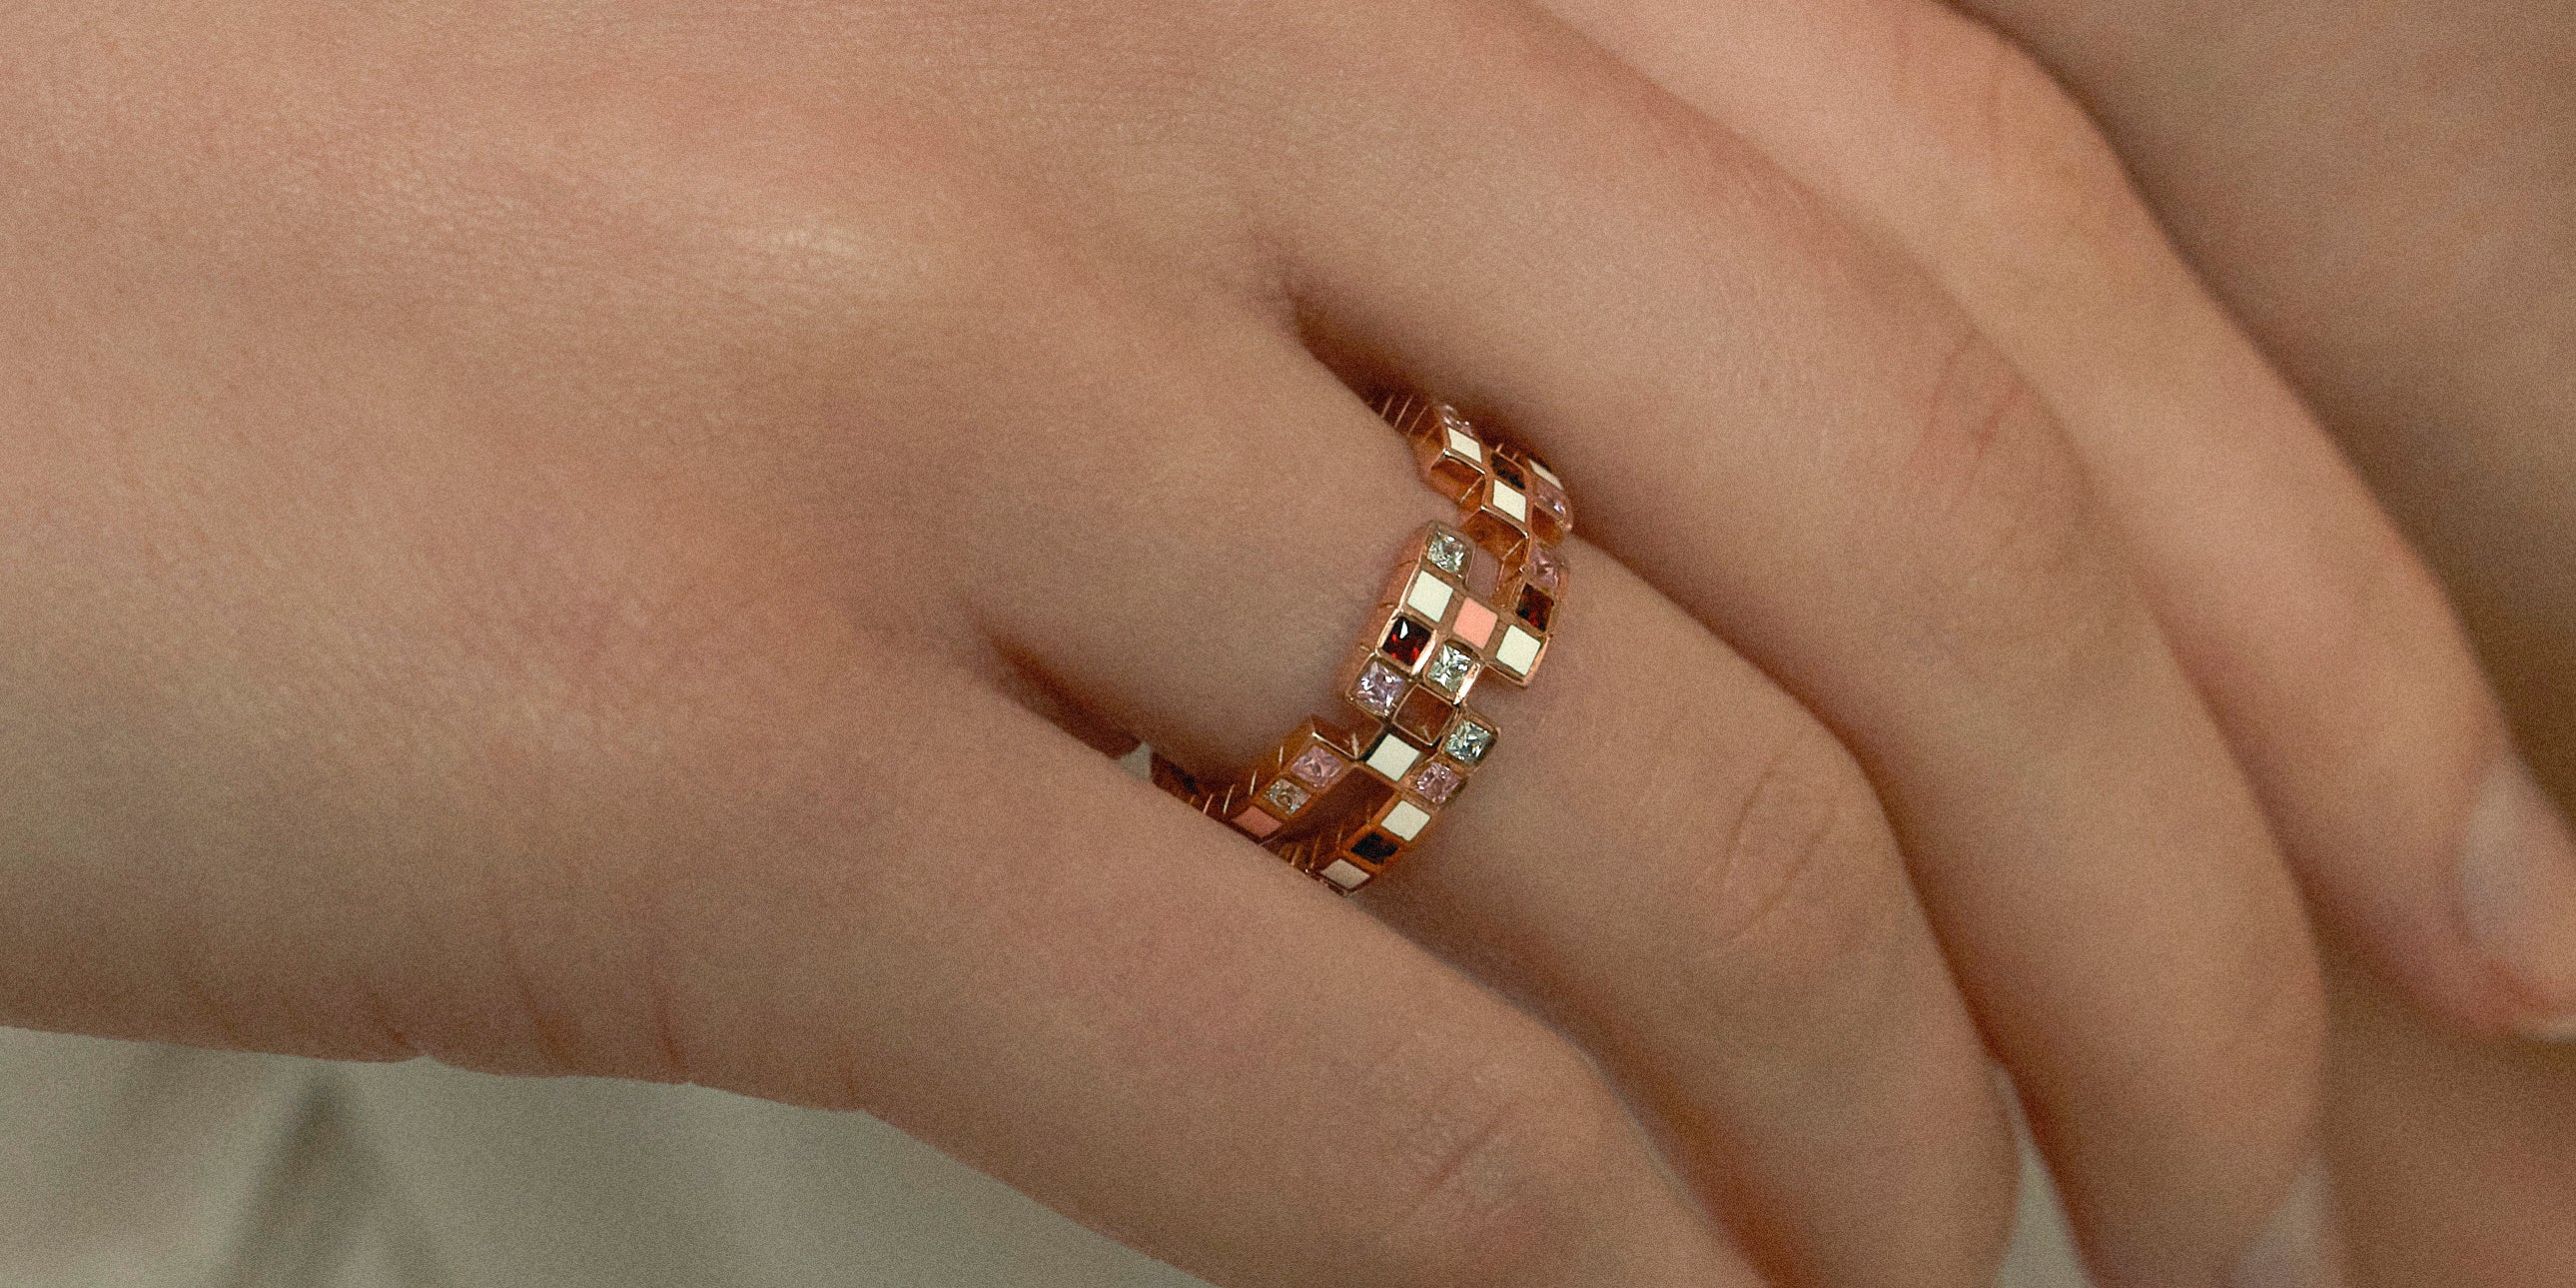 Bespoke wedding ring by EDXU